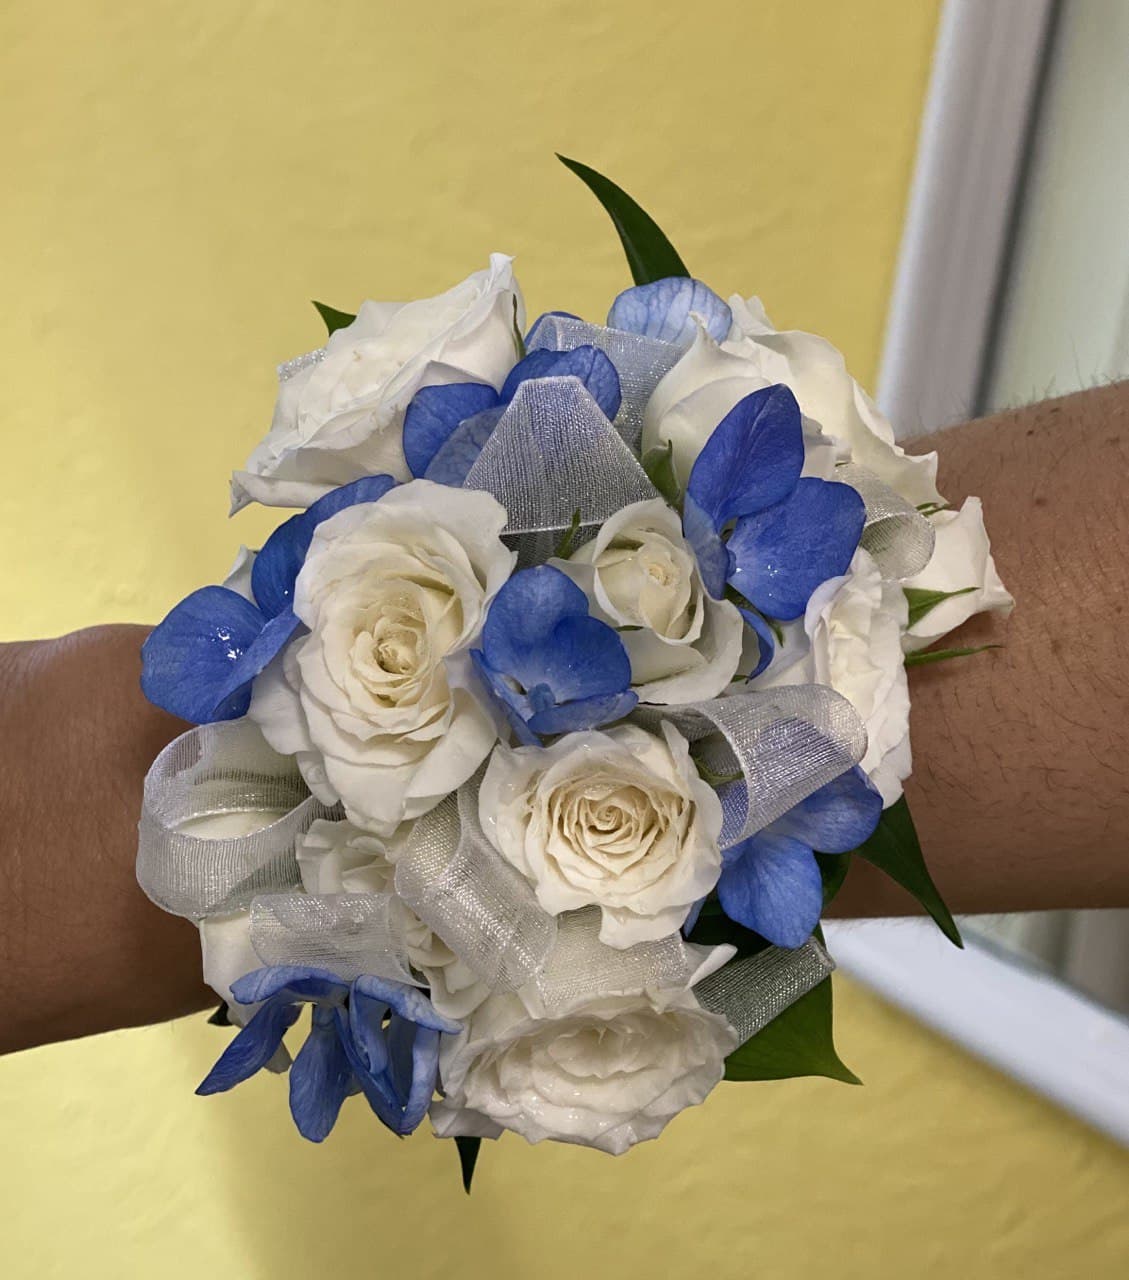 Pink Rose Wrist Corsage Atco Florist: Blue Violet Flowers